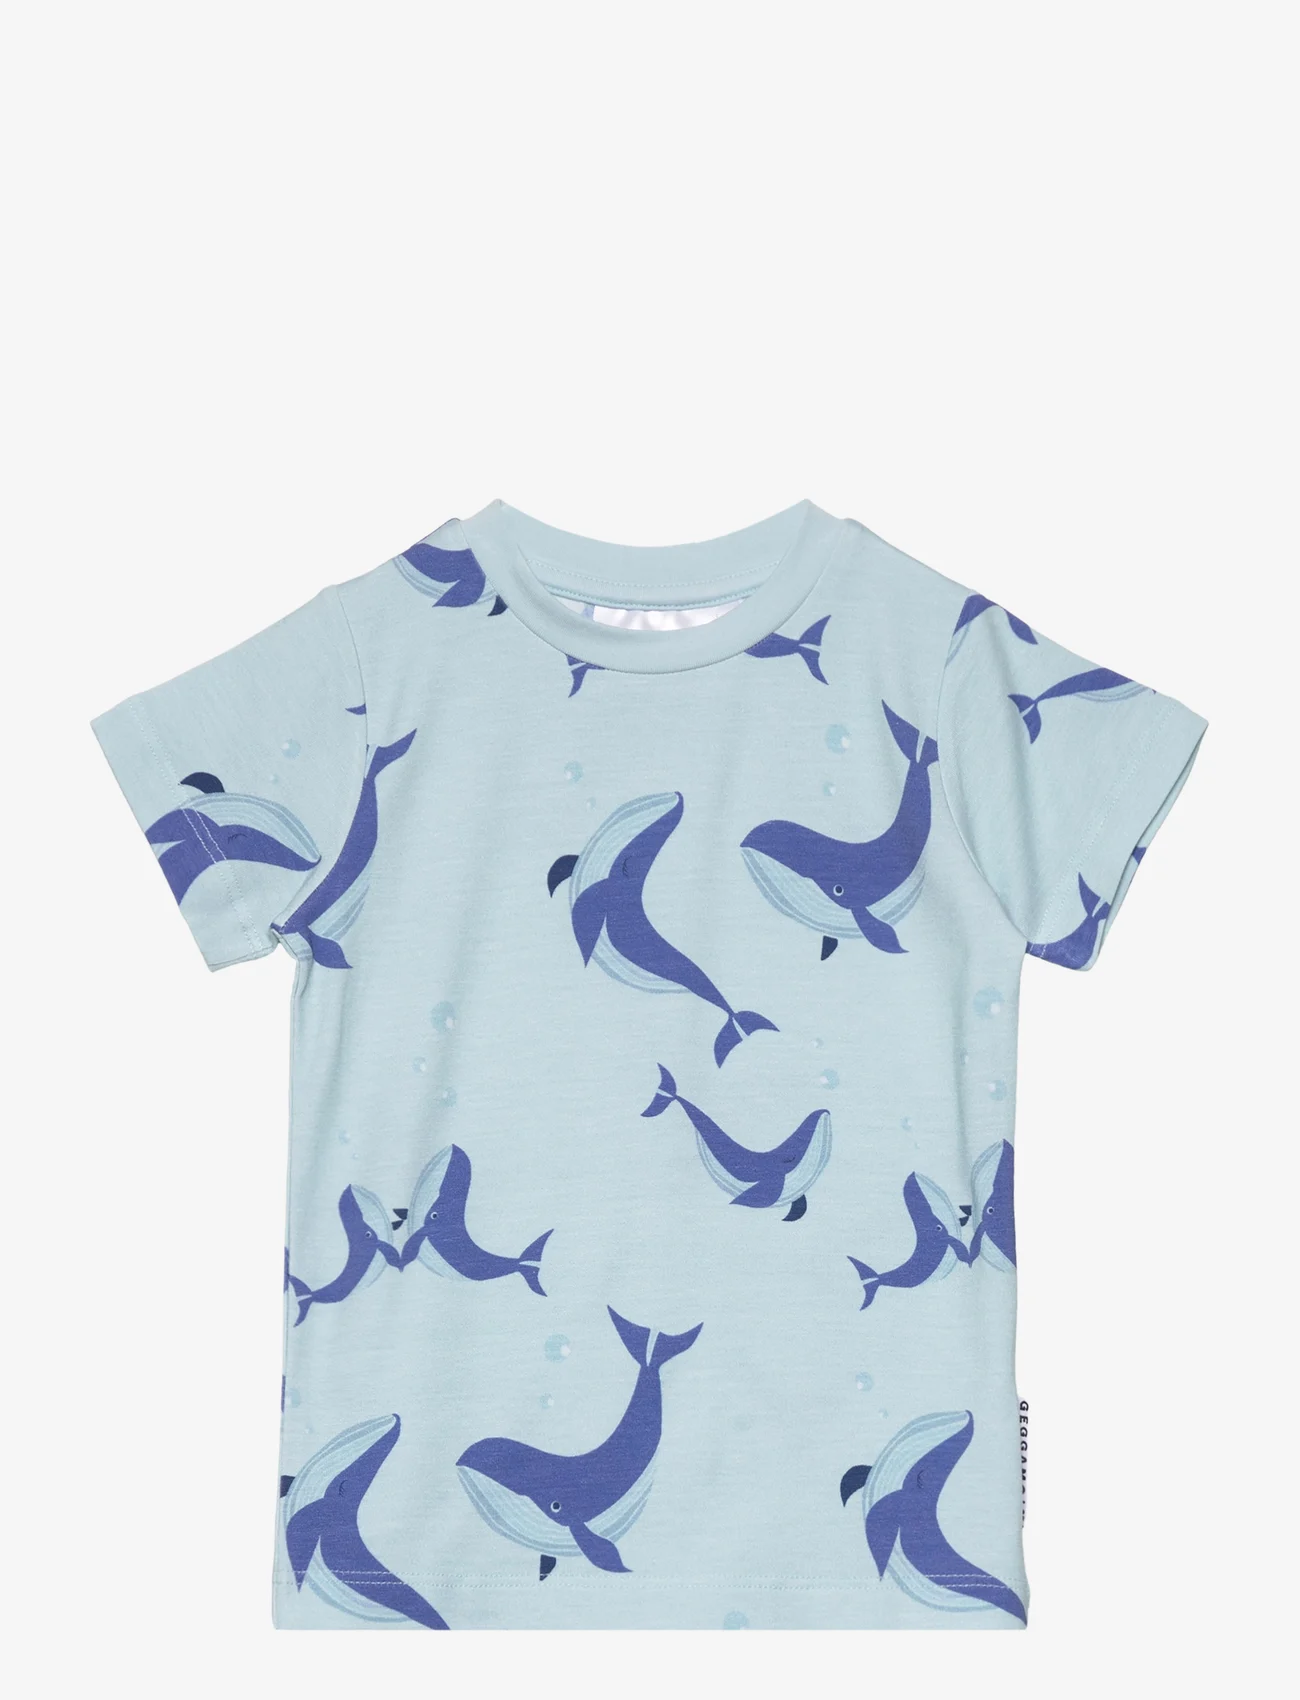 Geggamoja - Bamboo T-shirt - korte mouwen - l,blue whale - 0